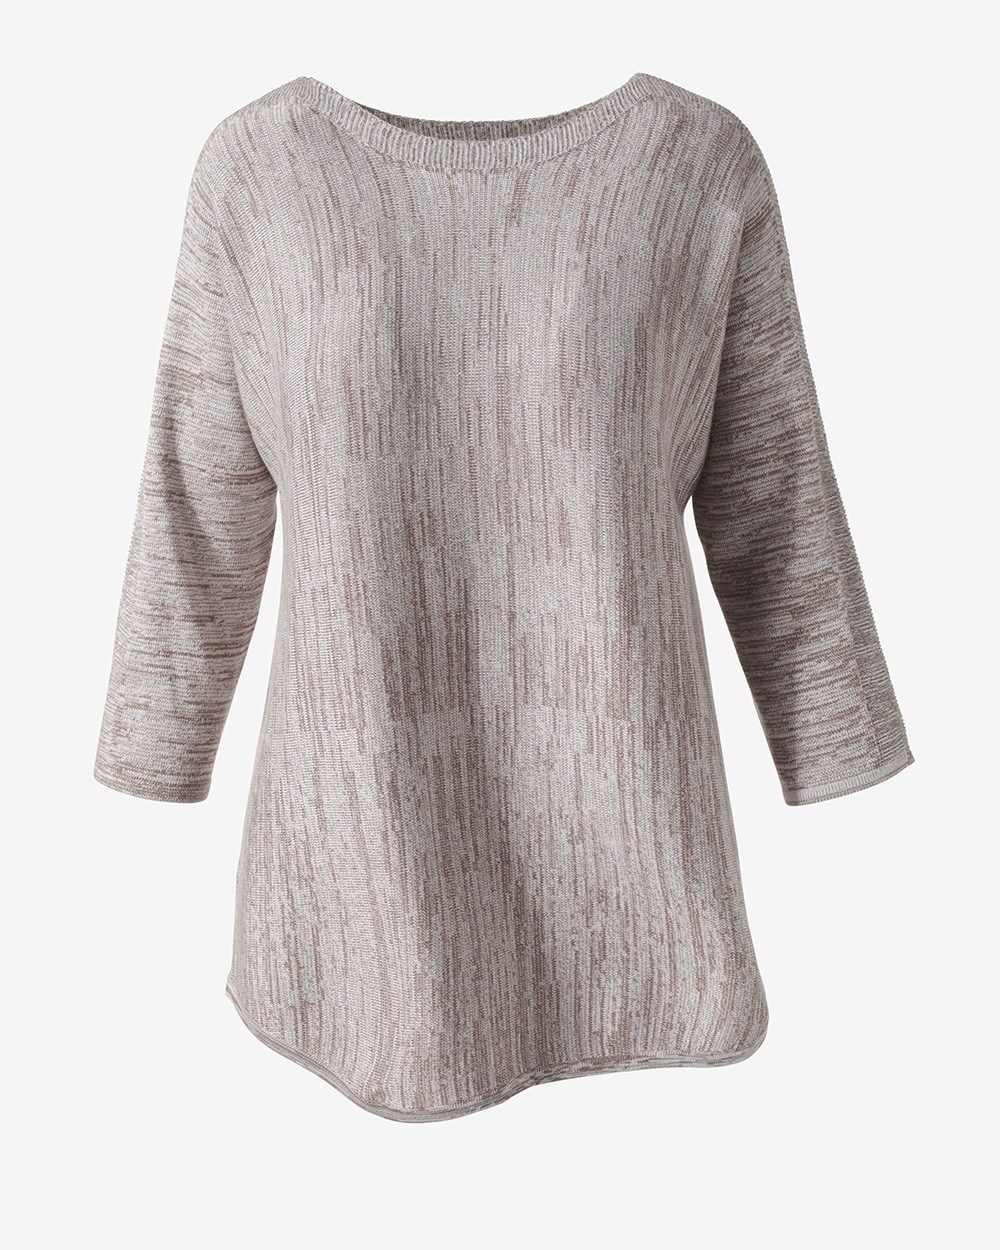 Spacedye Shirttail Pullover Sweater